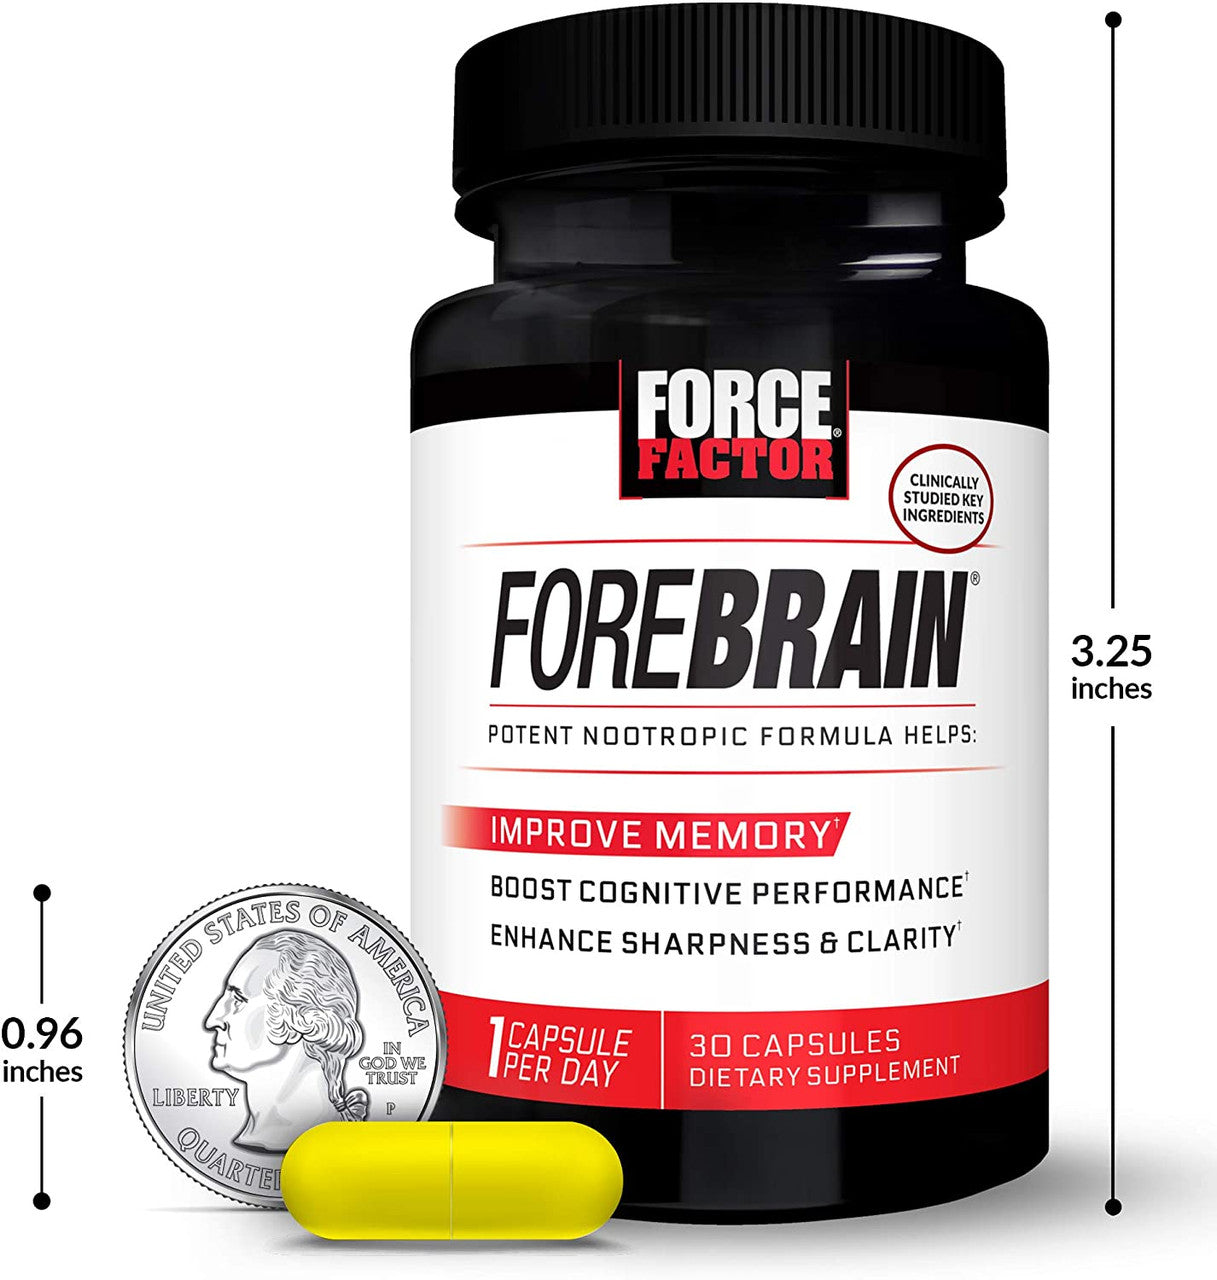 Force Factor ForeBrain actual capsule size